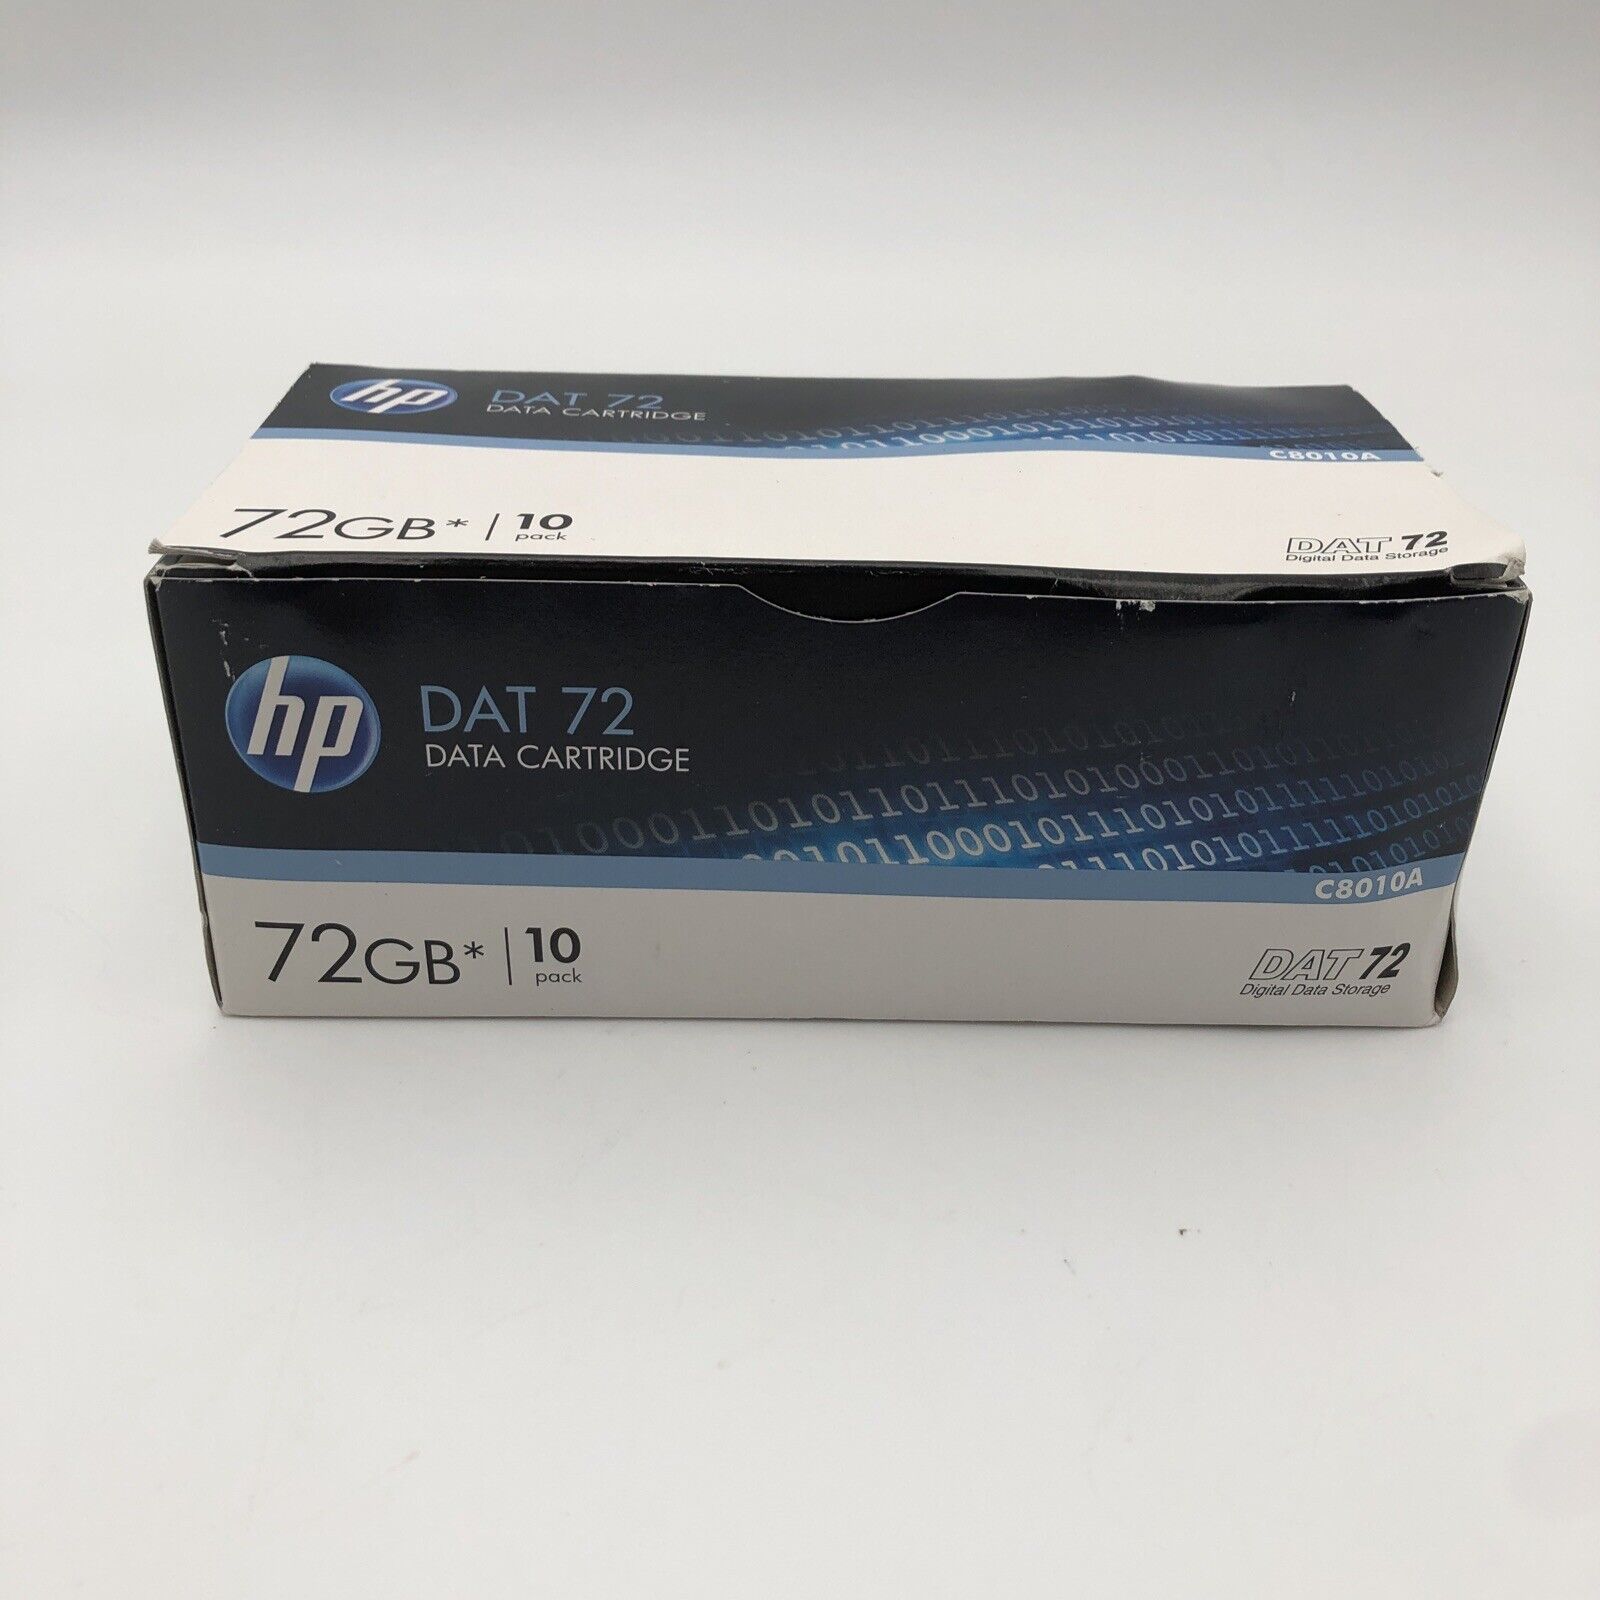 NOS HP DAT 72 Data Cartridge 10 Pack READ